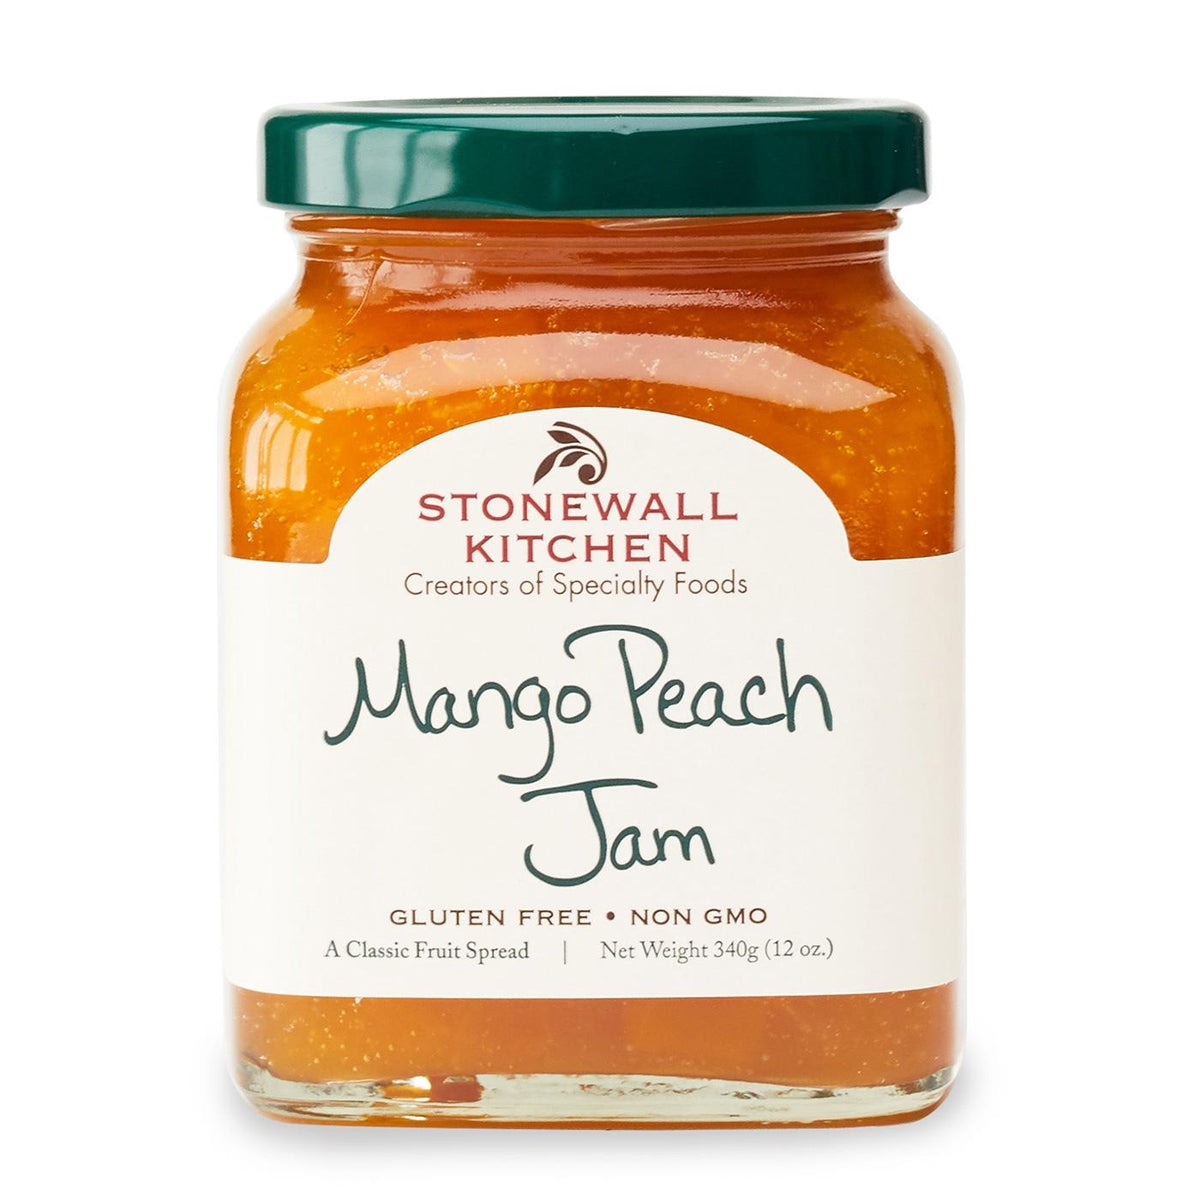 photo is a jar of stonewall kitchen mango peach jam 12 oz. made in maine